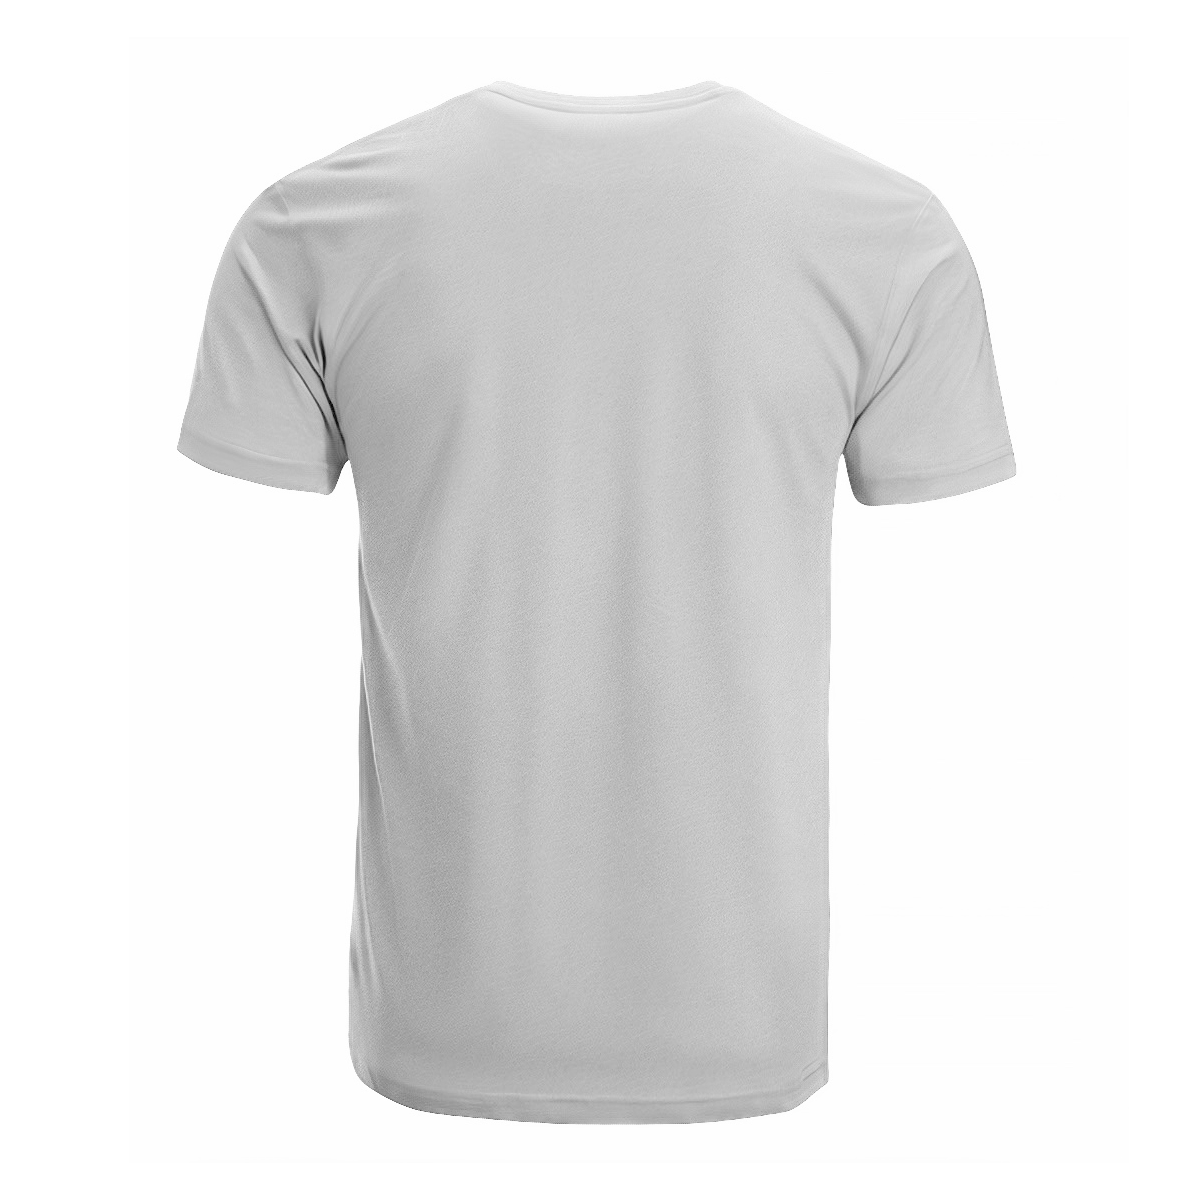 MacIntyre Tartan Crest T-shirt - I'm not yelling style